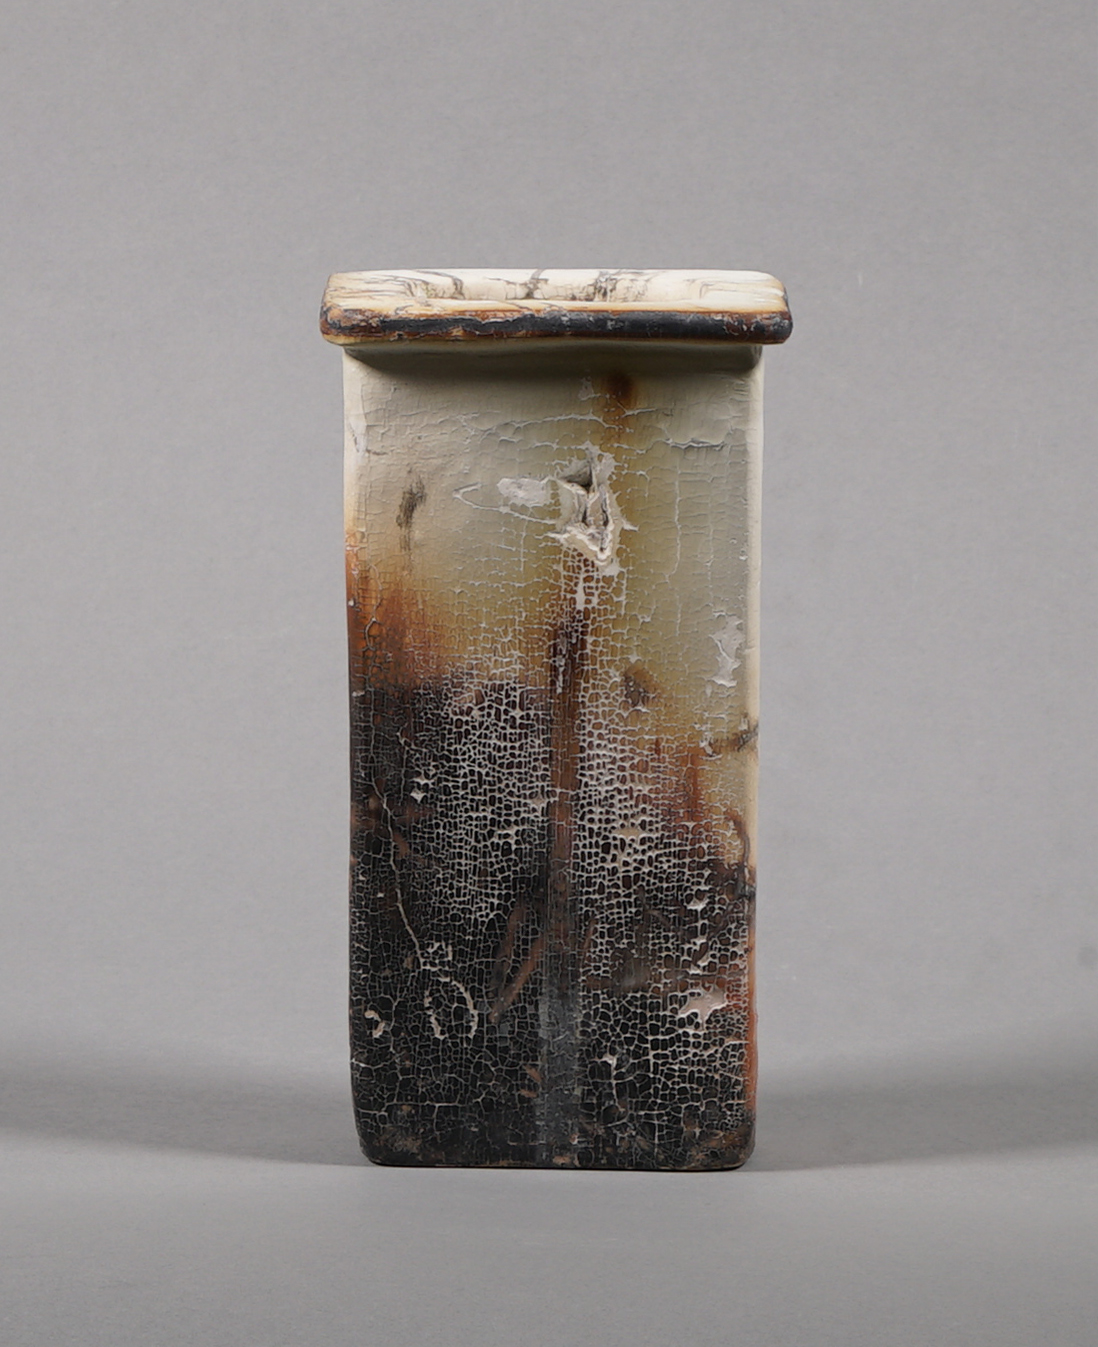  Vase. Stoneware. 2017. 